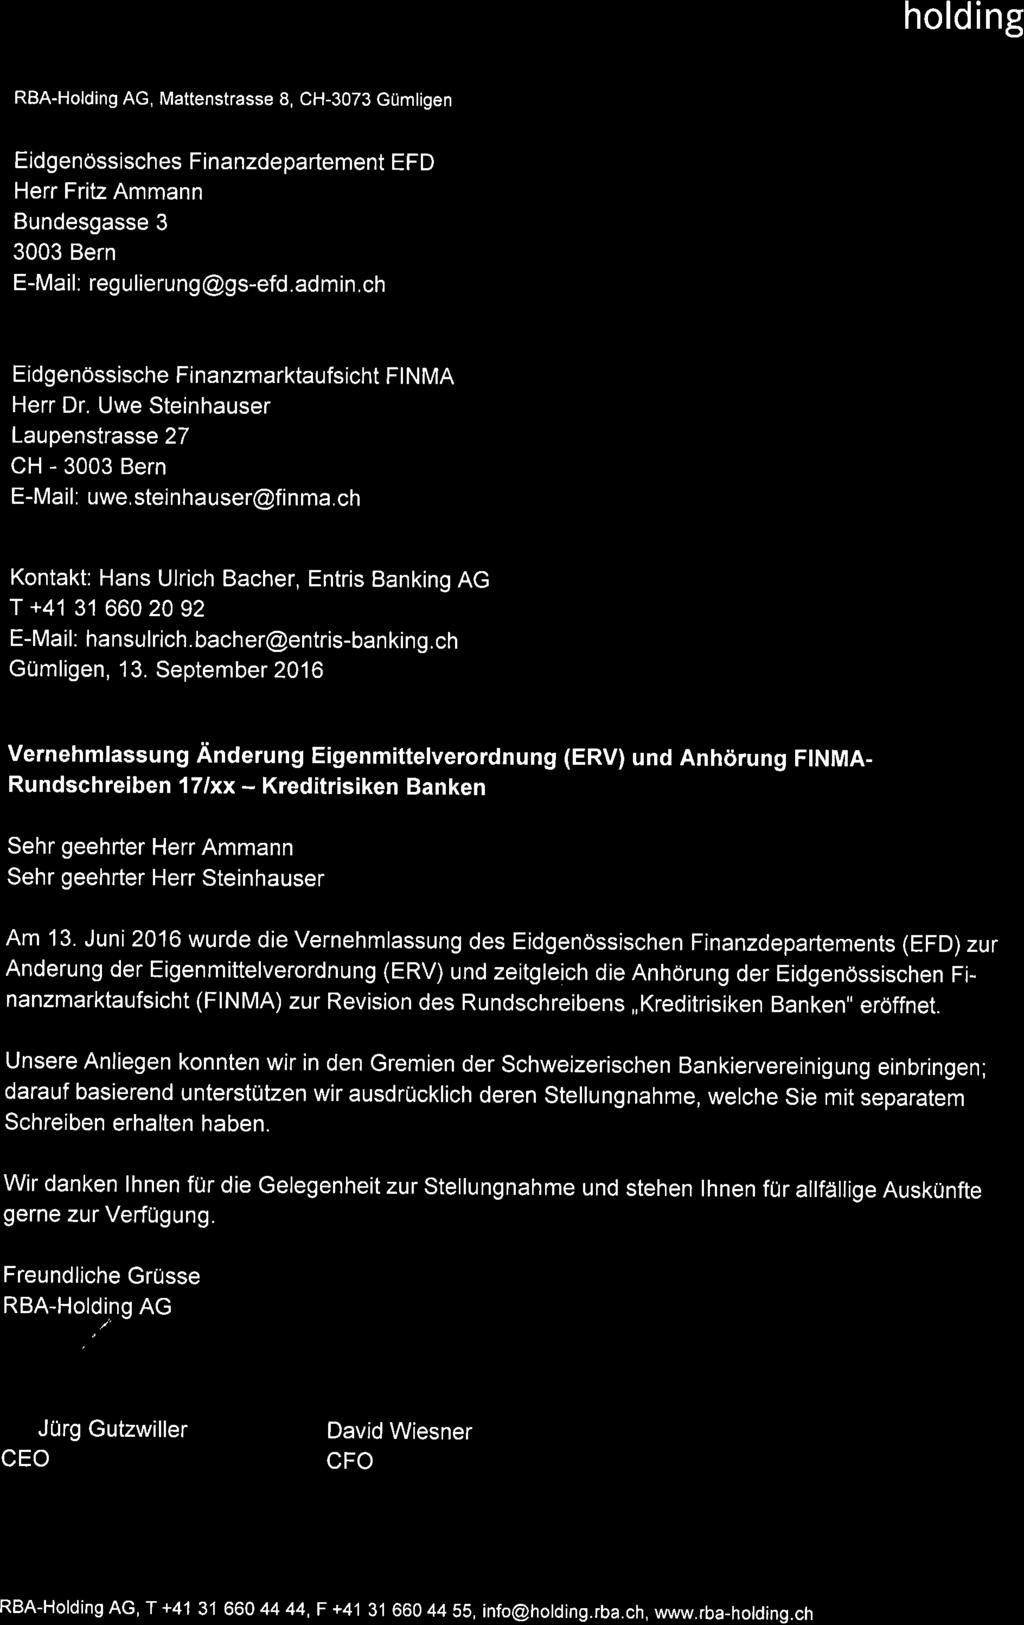 R B A holding RBA-Holding AG, Mattenstrasse 8, CH-3073 Gümligen Eidgenossisches Finanzdepartement EFD Herr Fritz Ammann Bundesgasse 3 3003 Bern E-Mail: regulierung@gs-efd.admin.